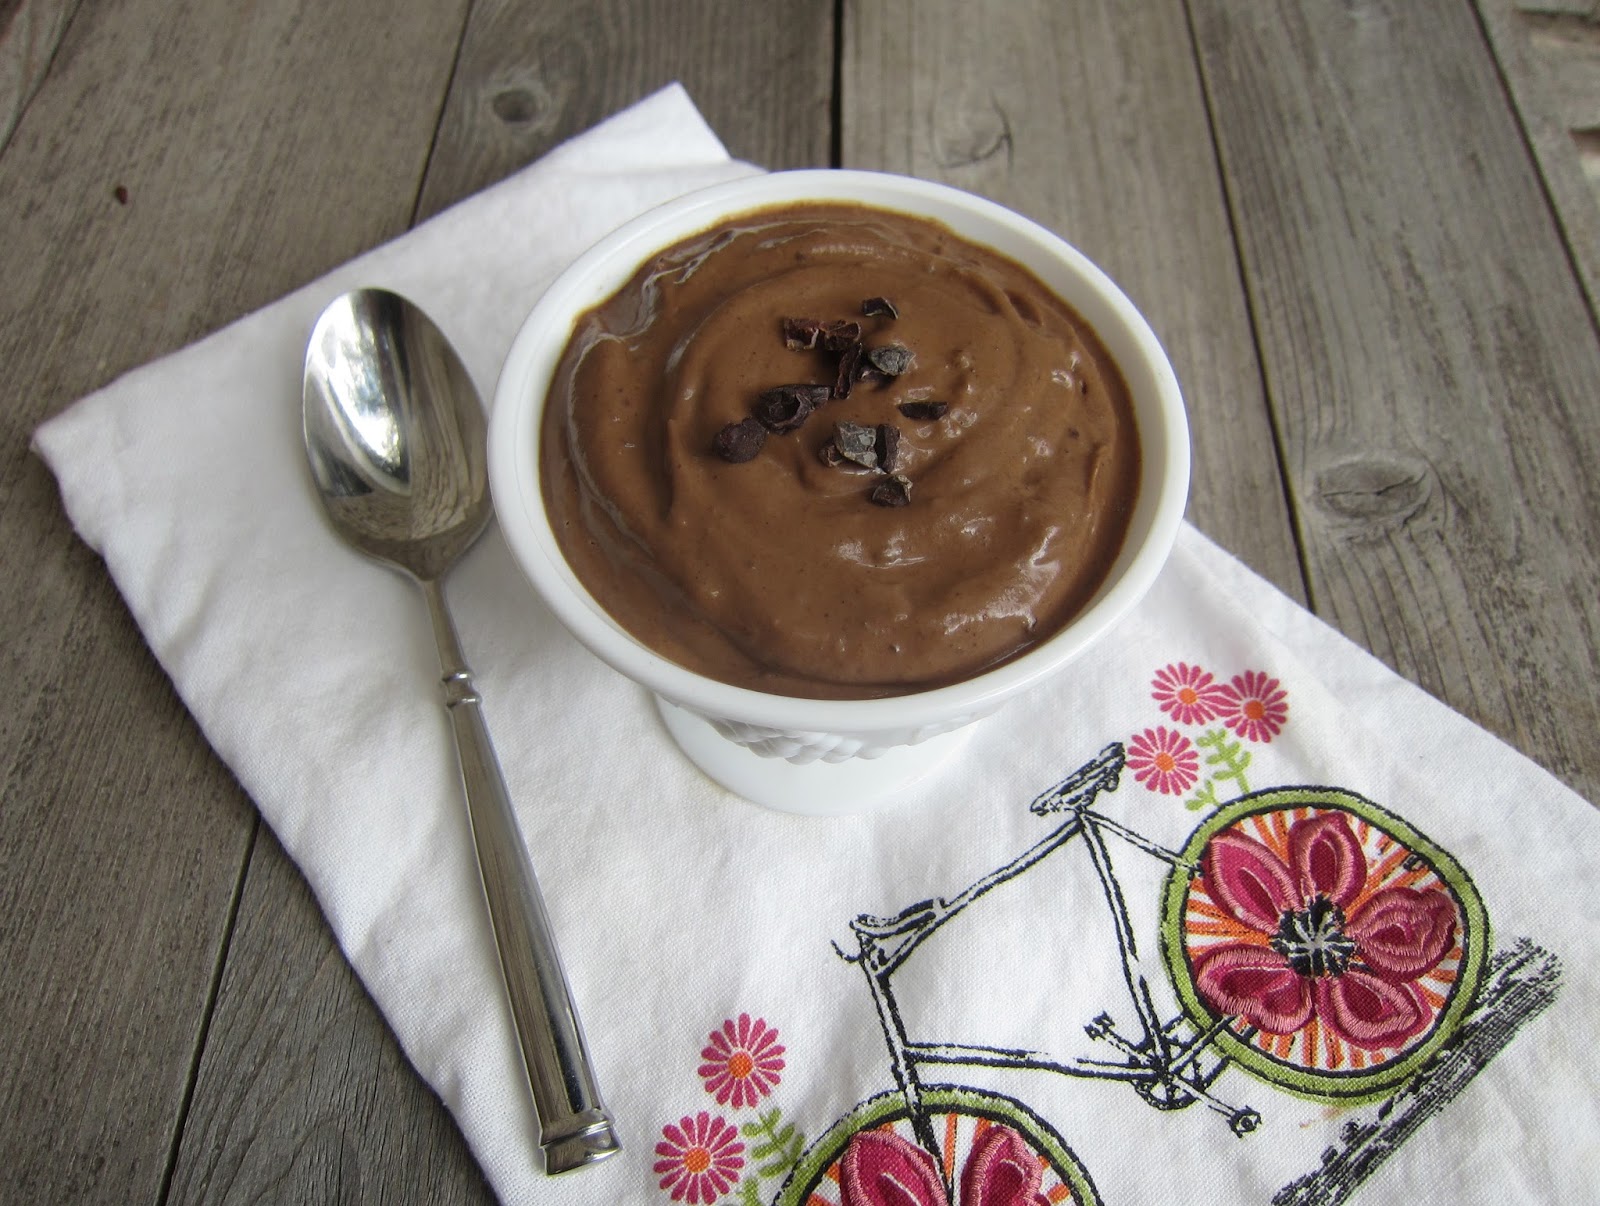 Best paleo chocolate pudding